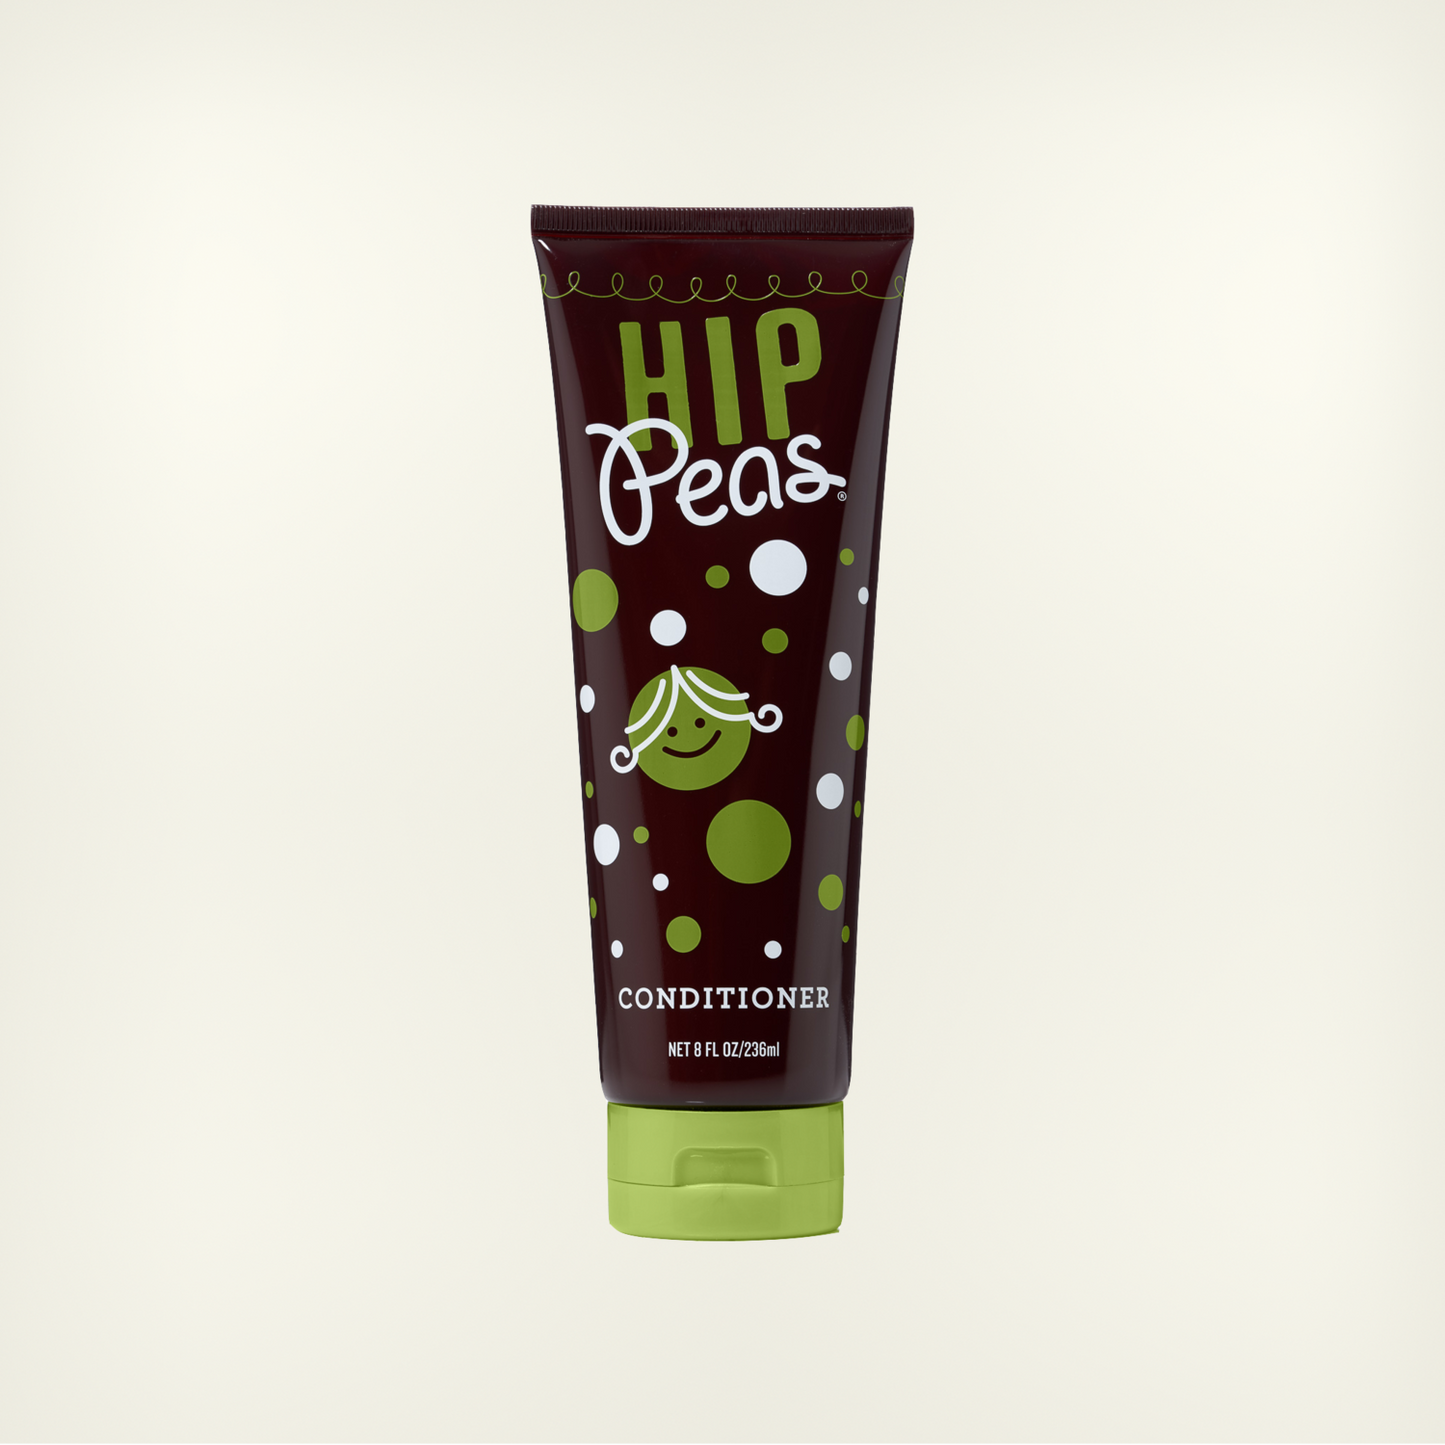 Hip Peas Conditioner